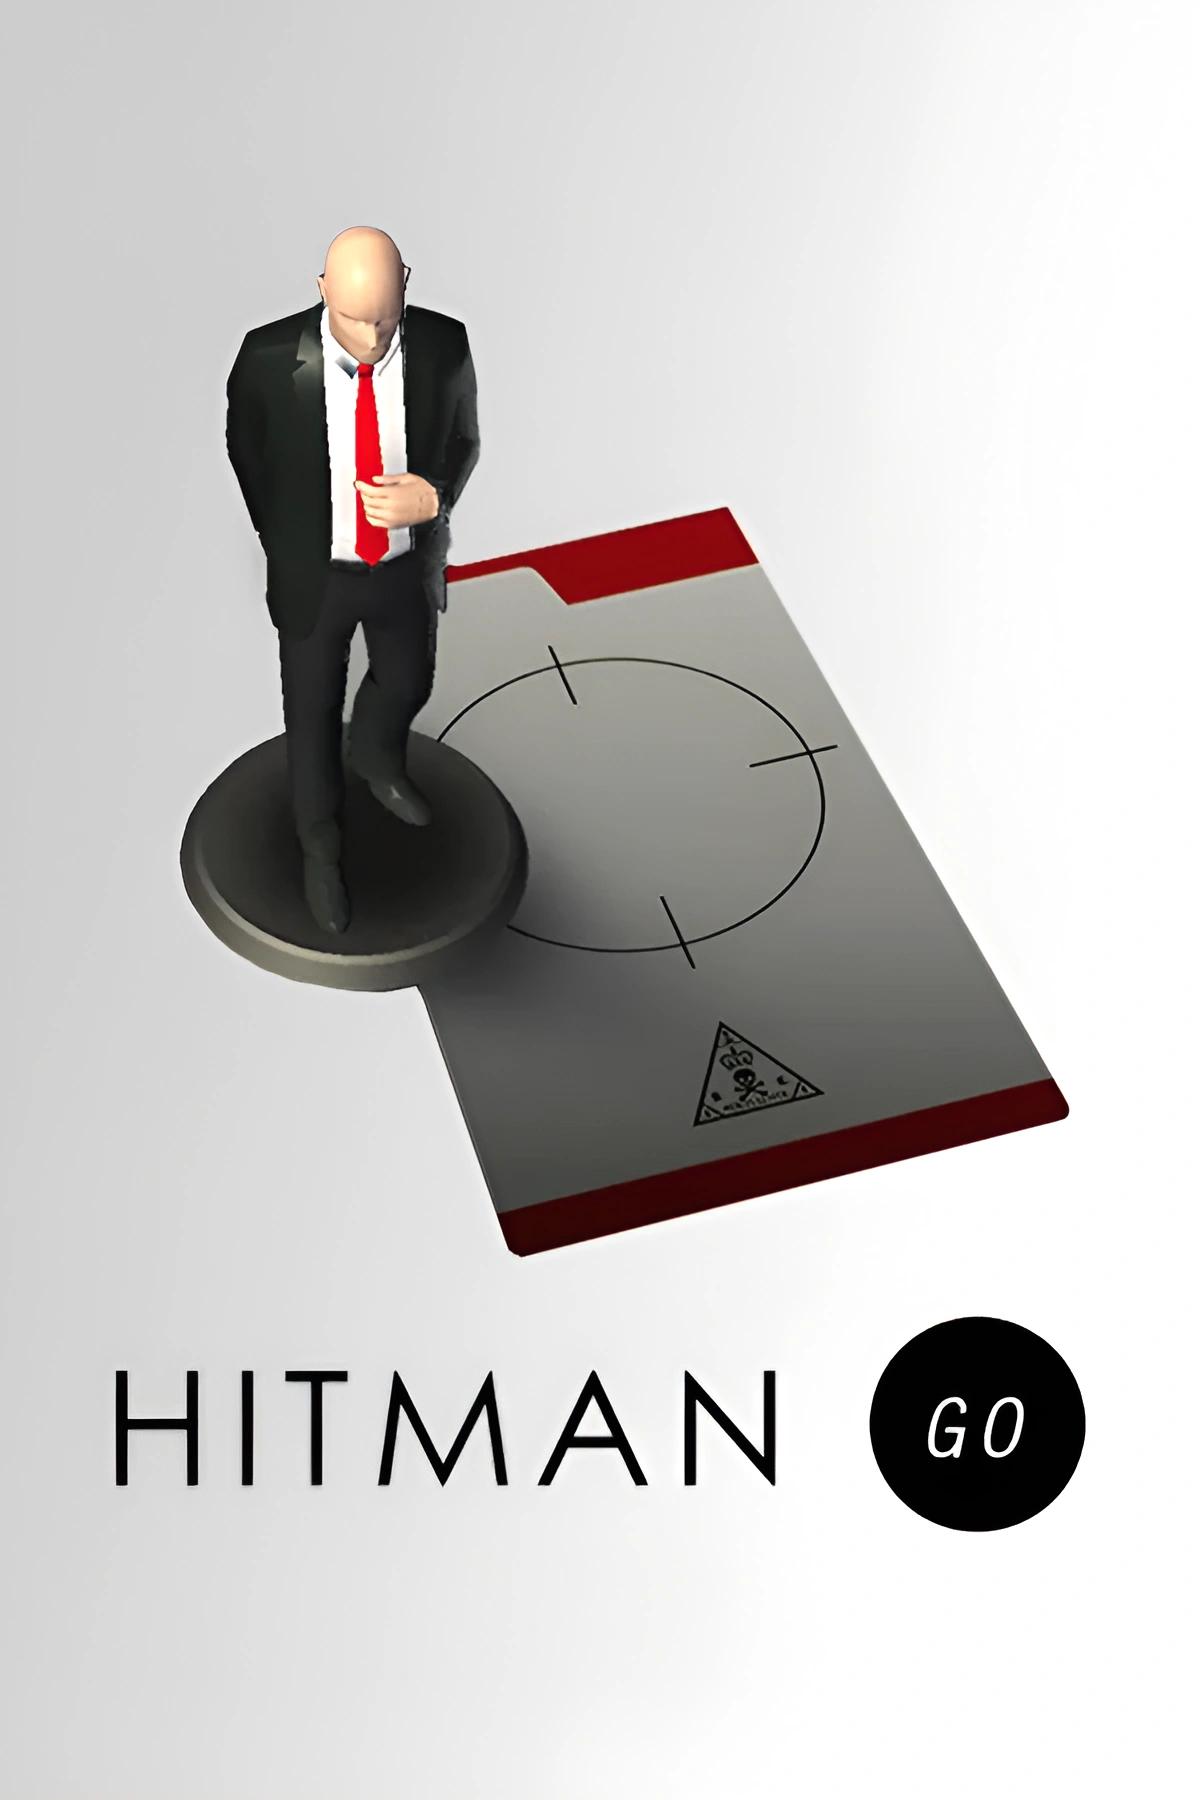 Hitman GO: Definitive Edition Download